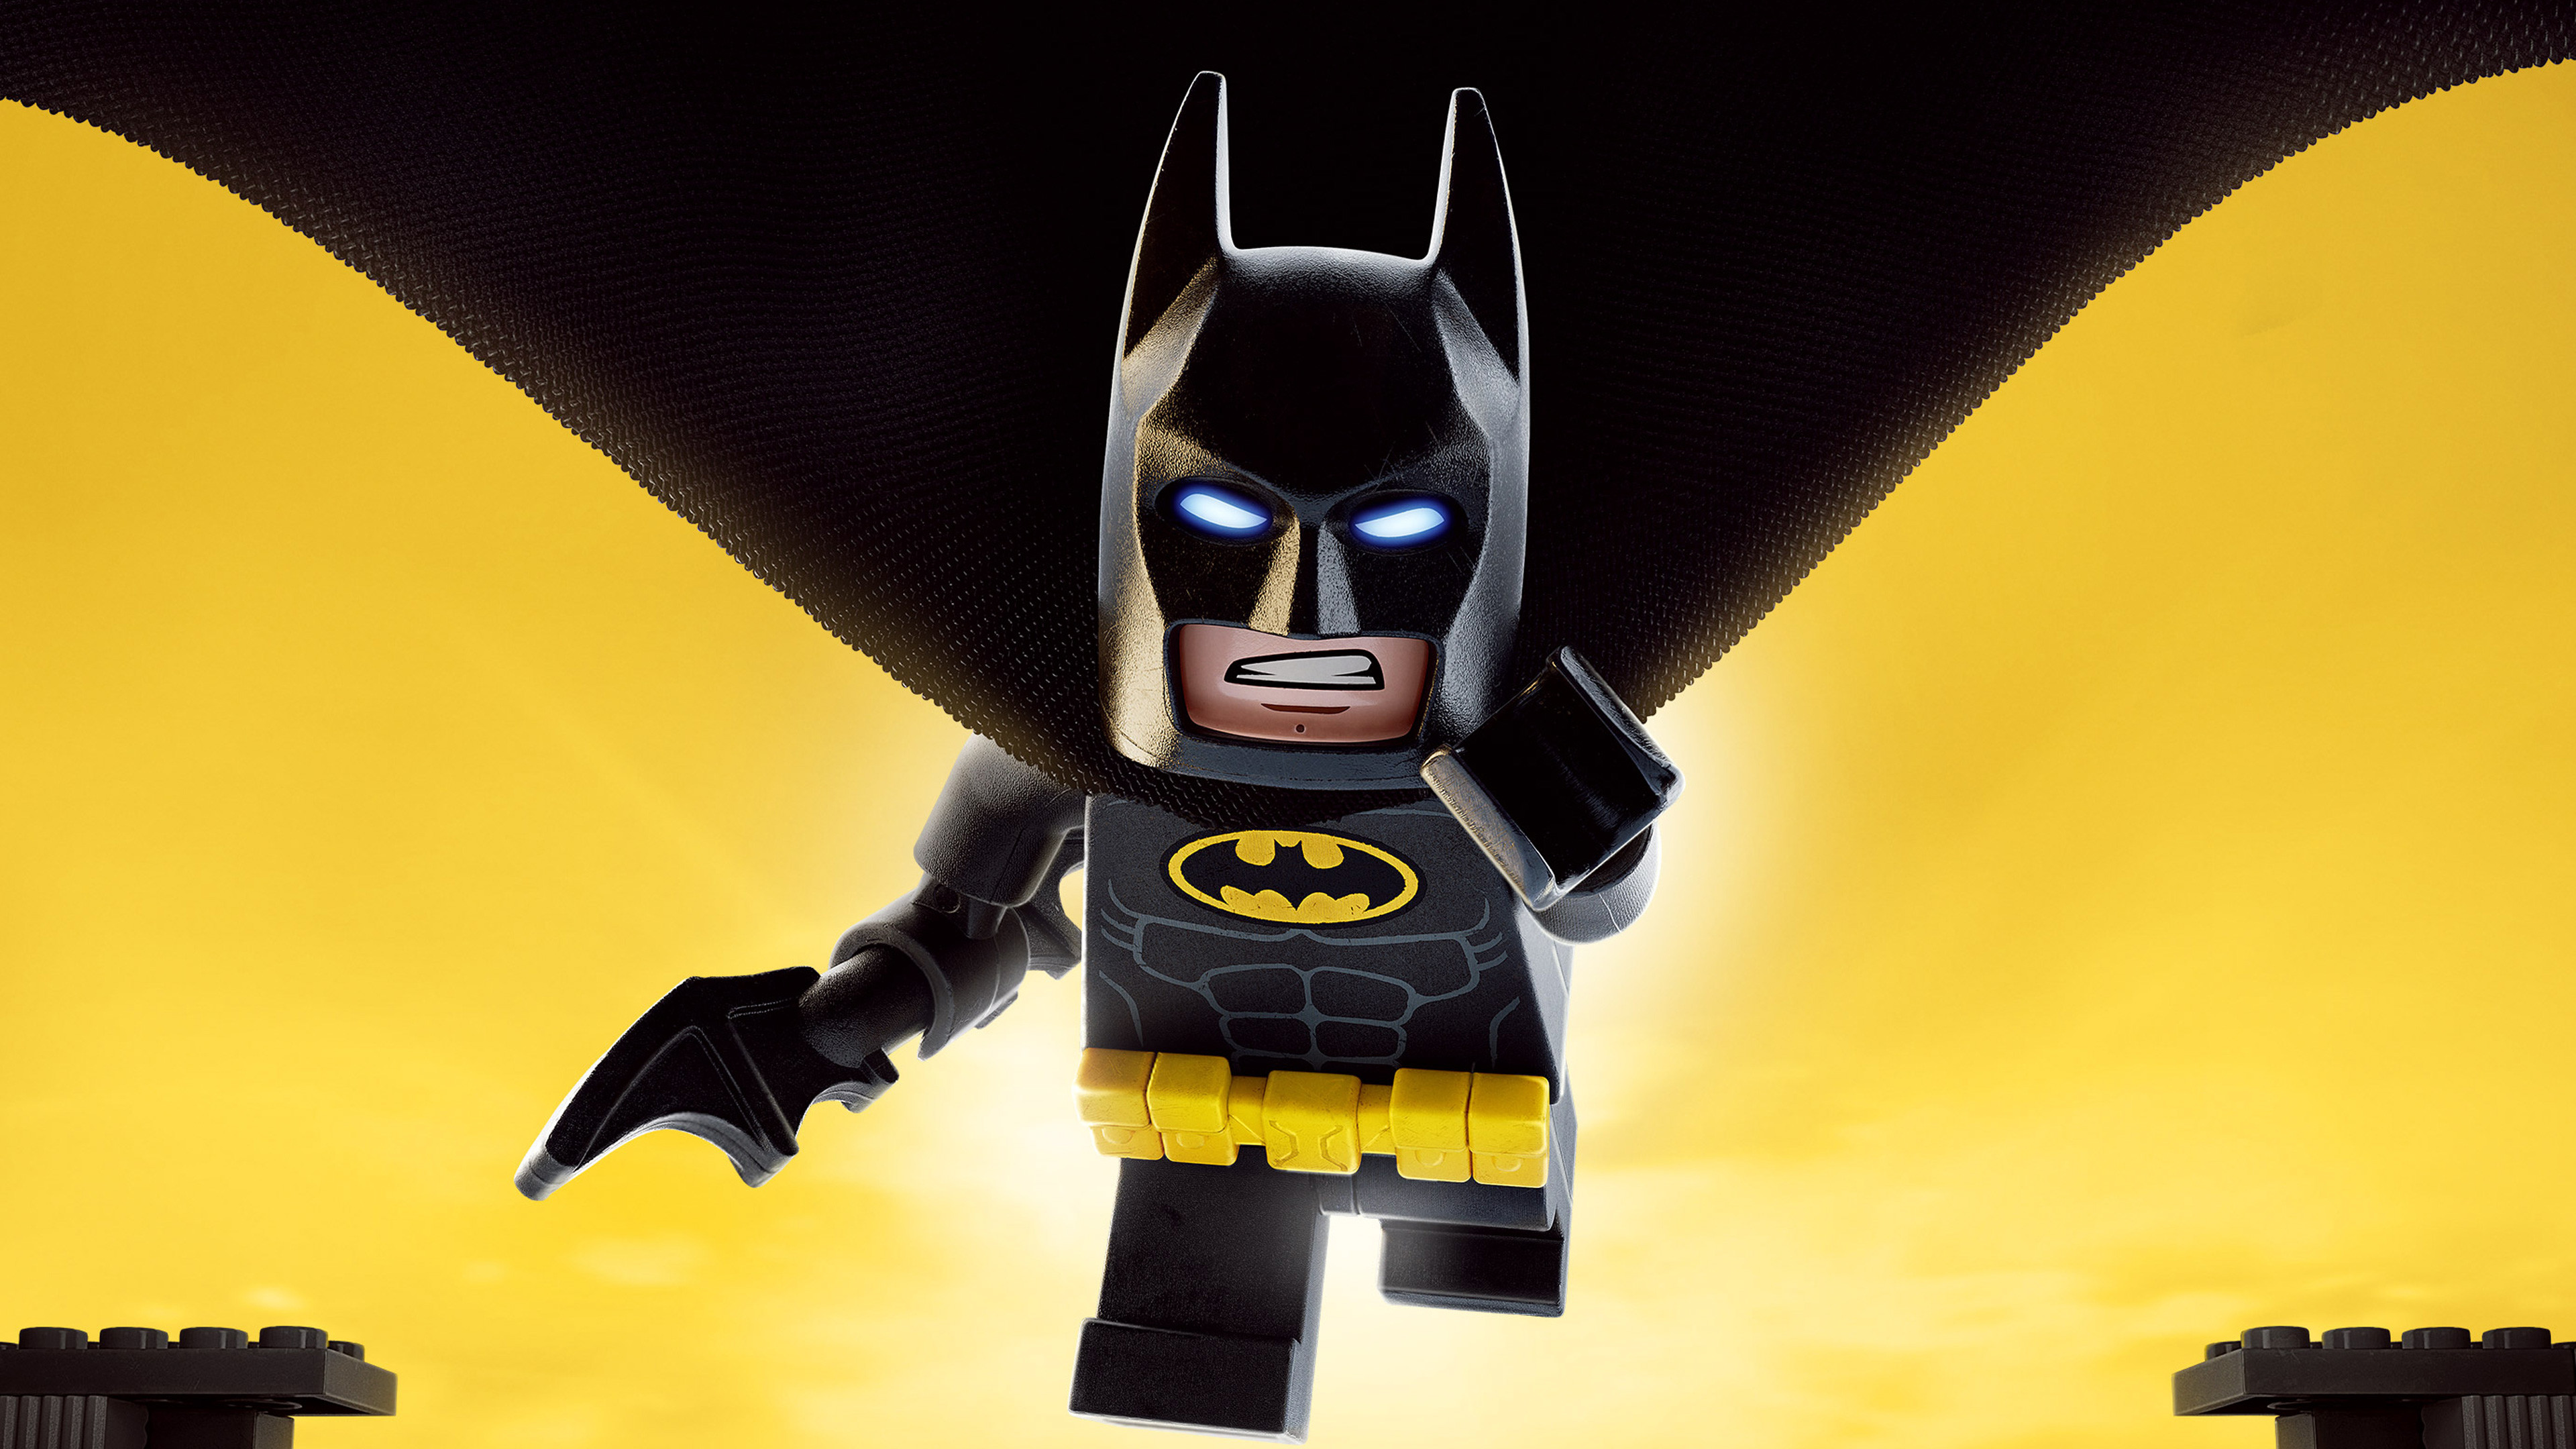 3840x2160 The Lego Batman Movie 4K 2017 - This HD wallpaper is based on The Lego  Batman